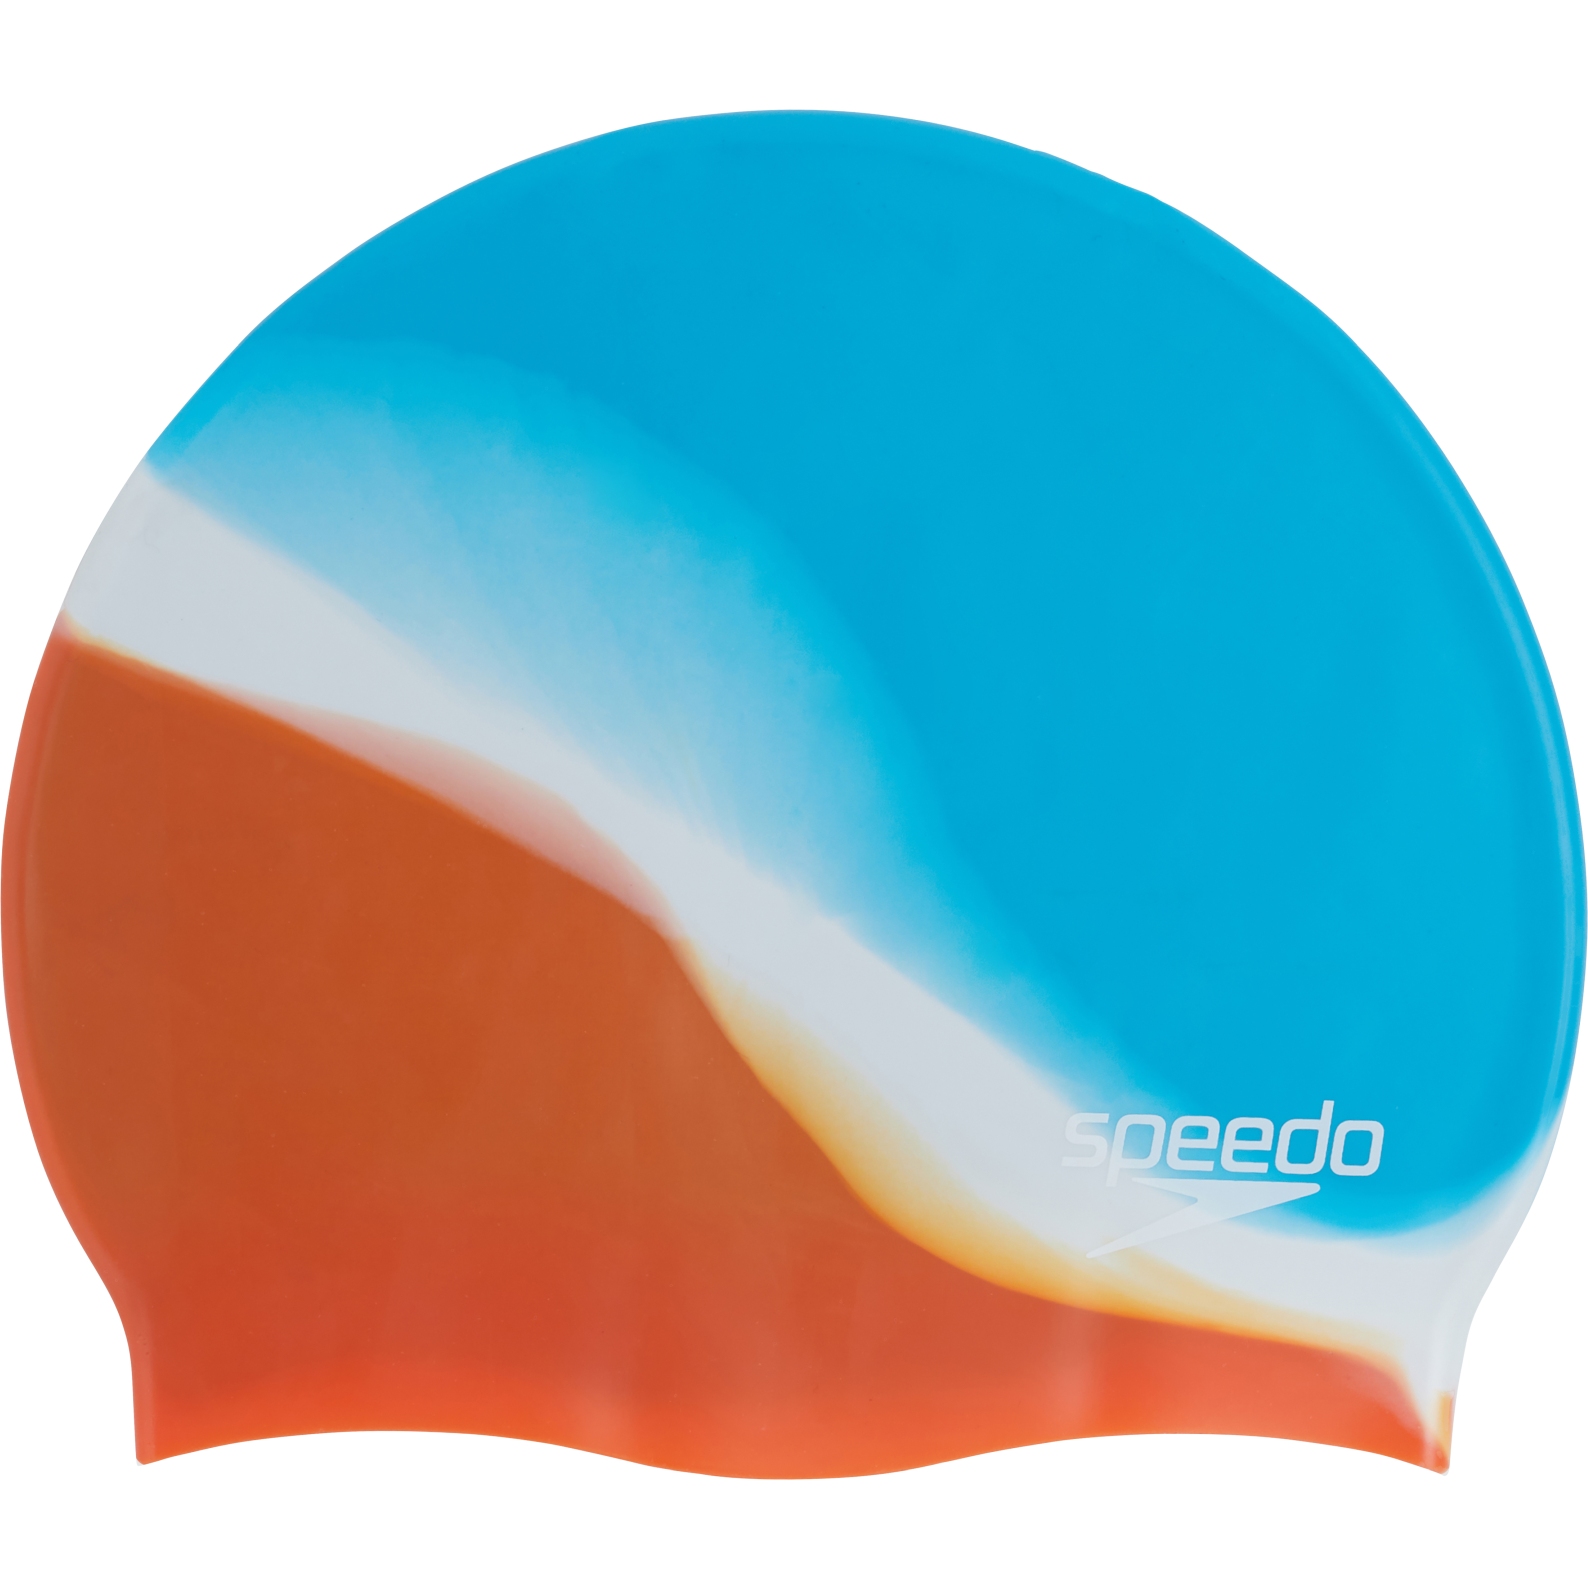 Produktbild von Speedo Multi Colour Badekappe - hypersonic blue/volcanic orange